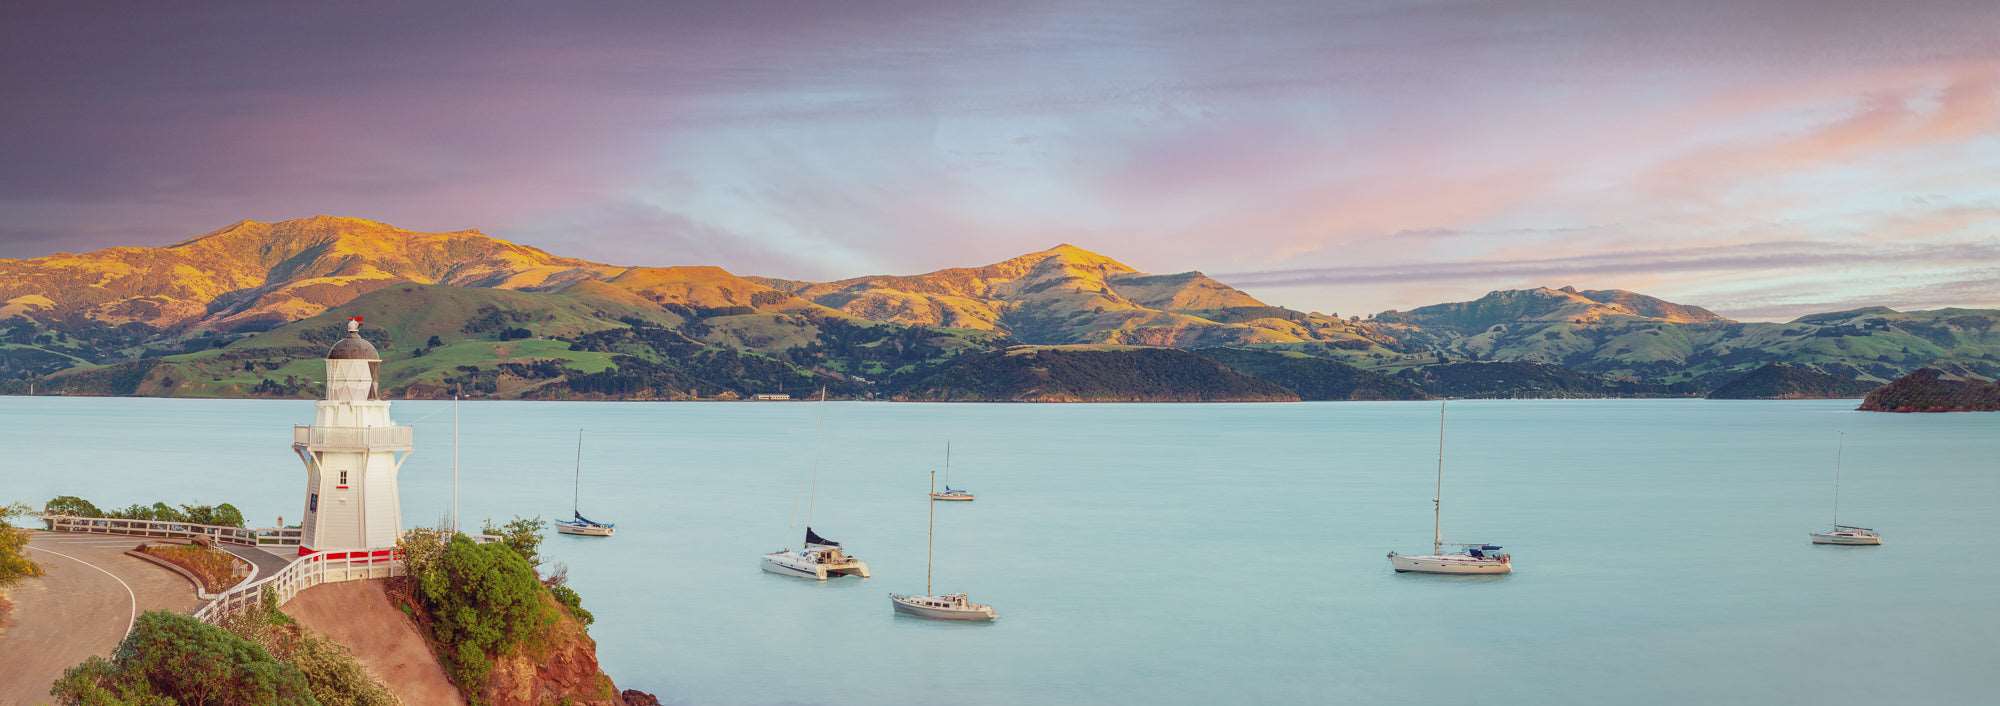 Akaroa's Lighthouse Embrace at Dawn - by Award Winning New Zealand Landscape Photographer Stephen Milner